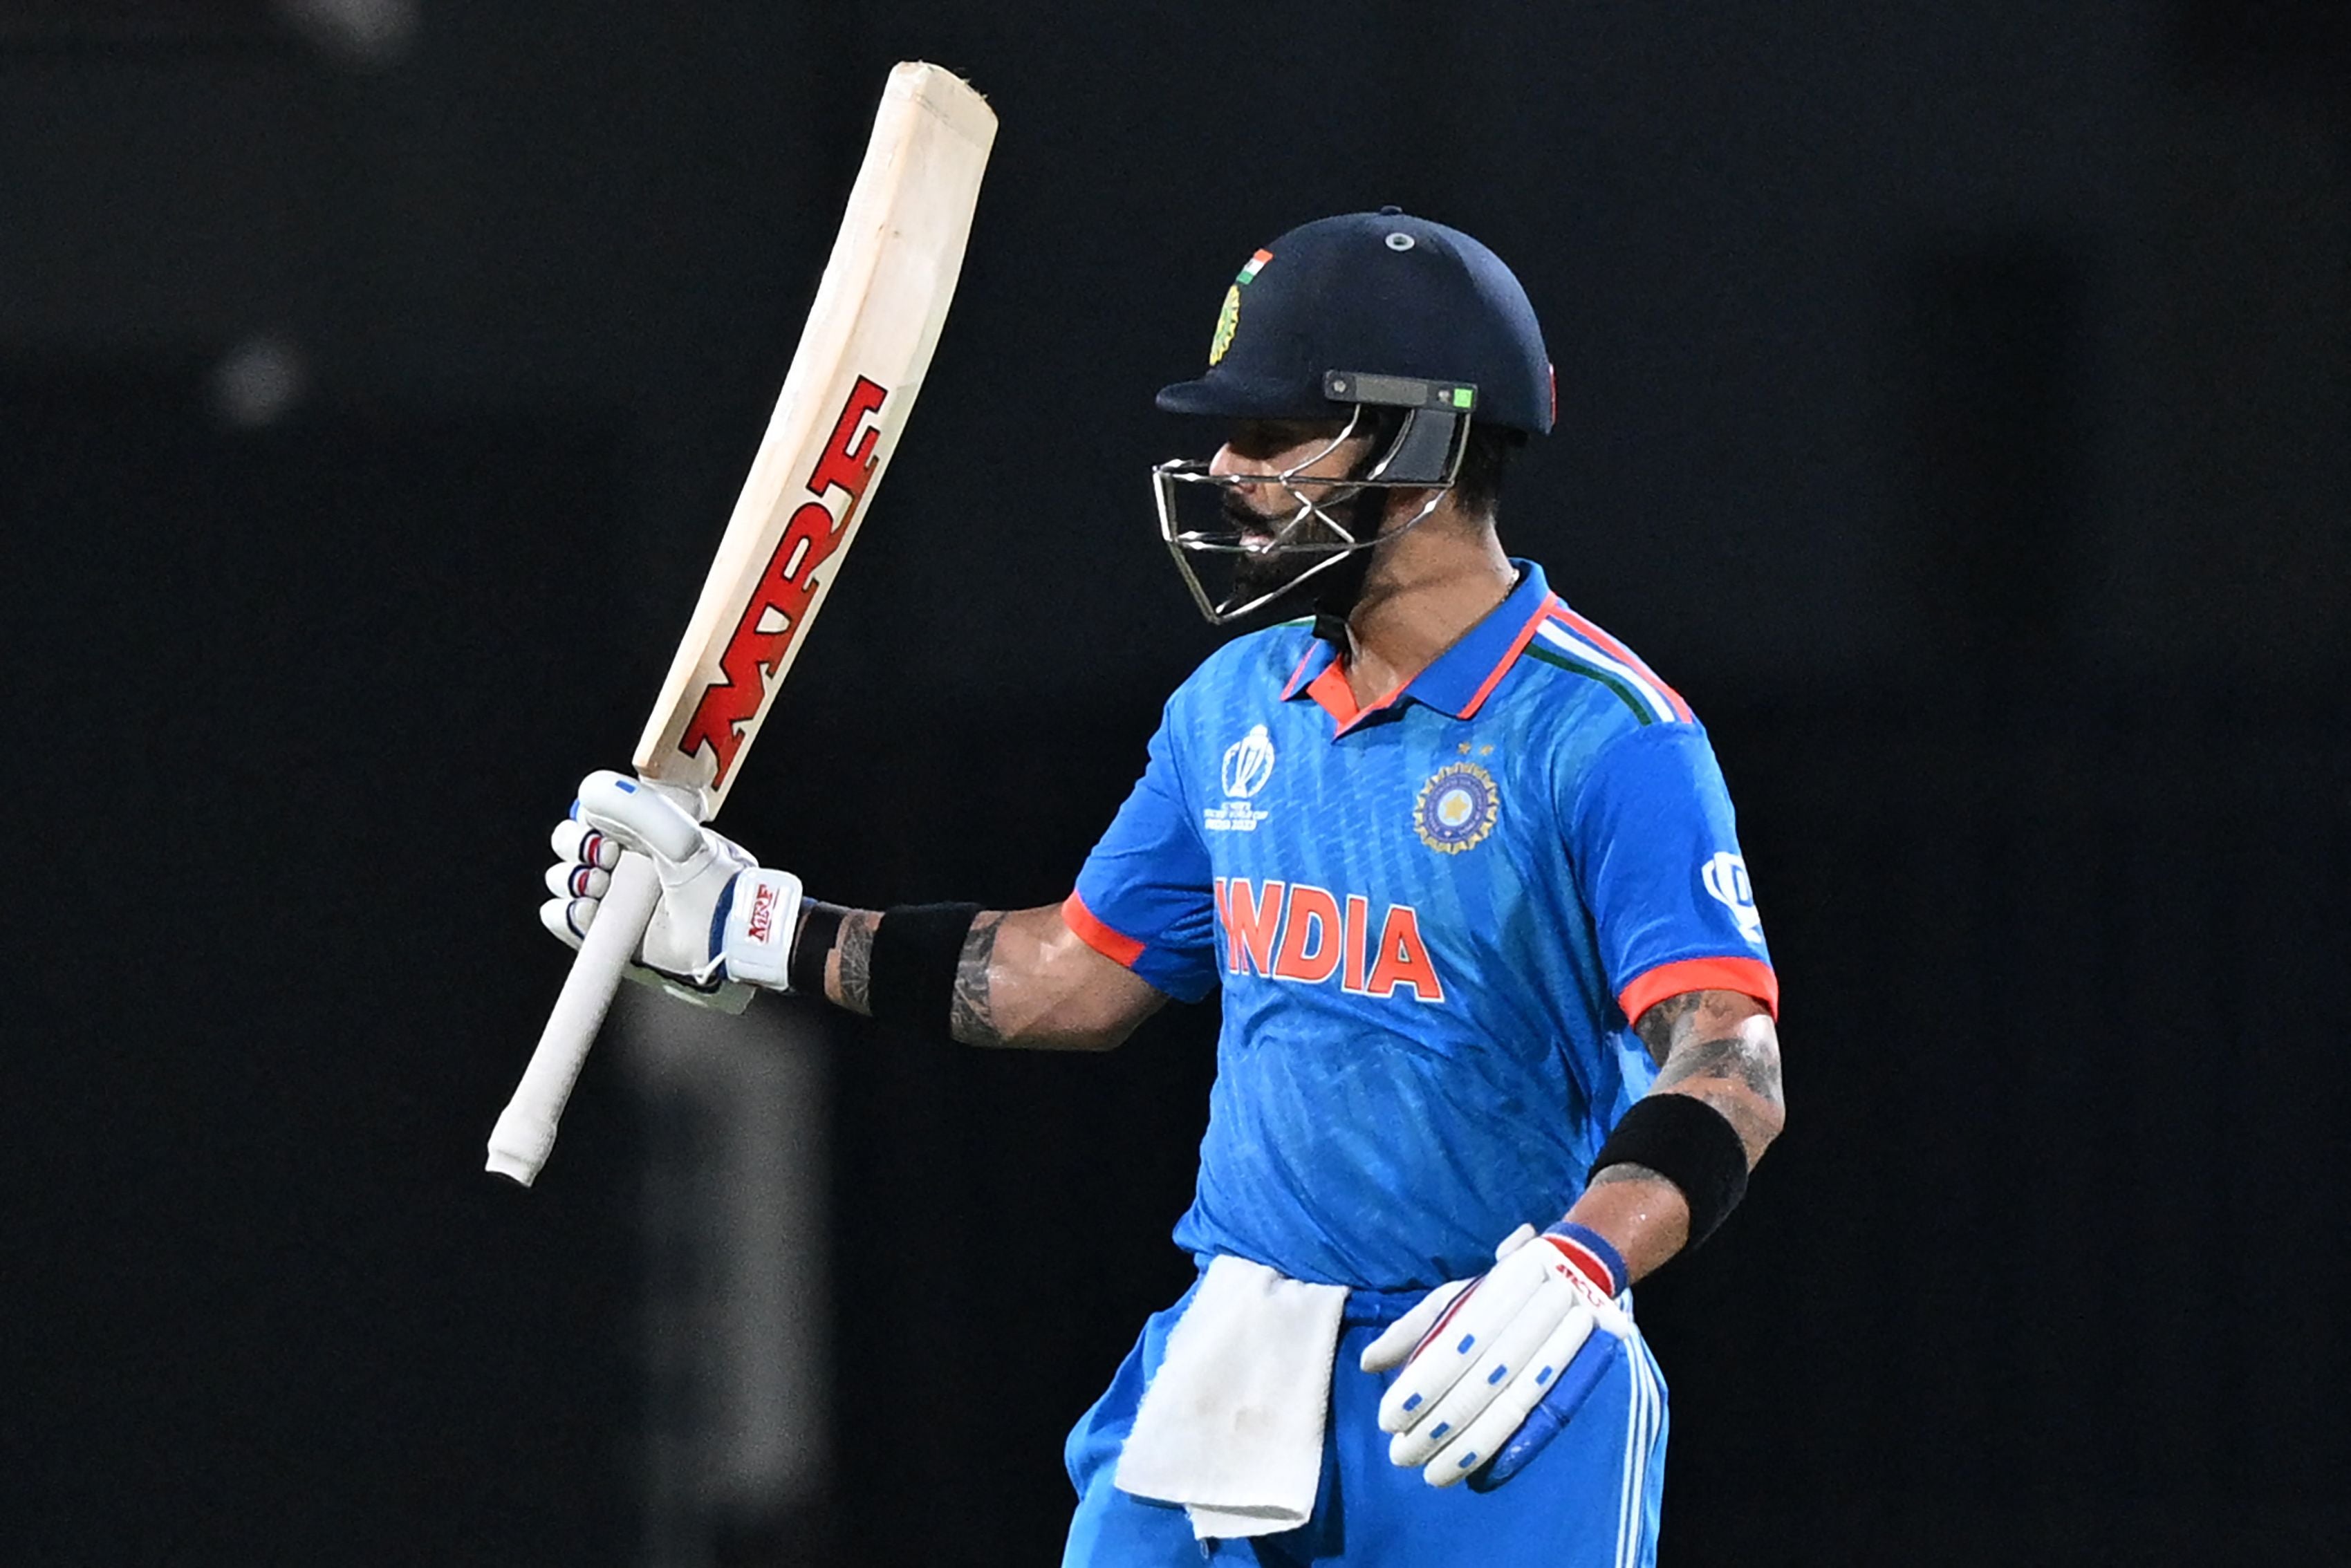 Kohli celebrates his 50 in India’s World Cup opener against Australia